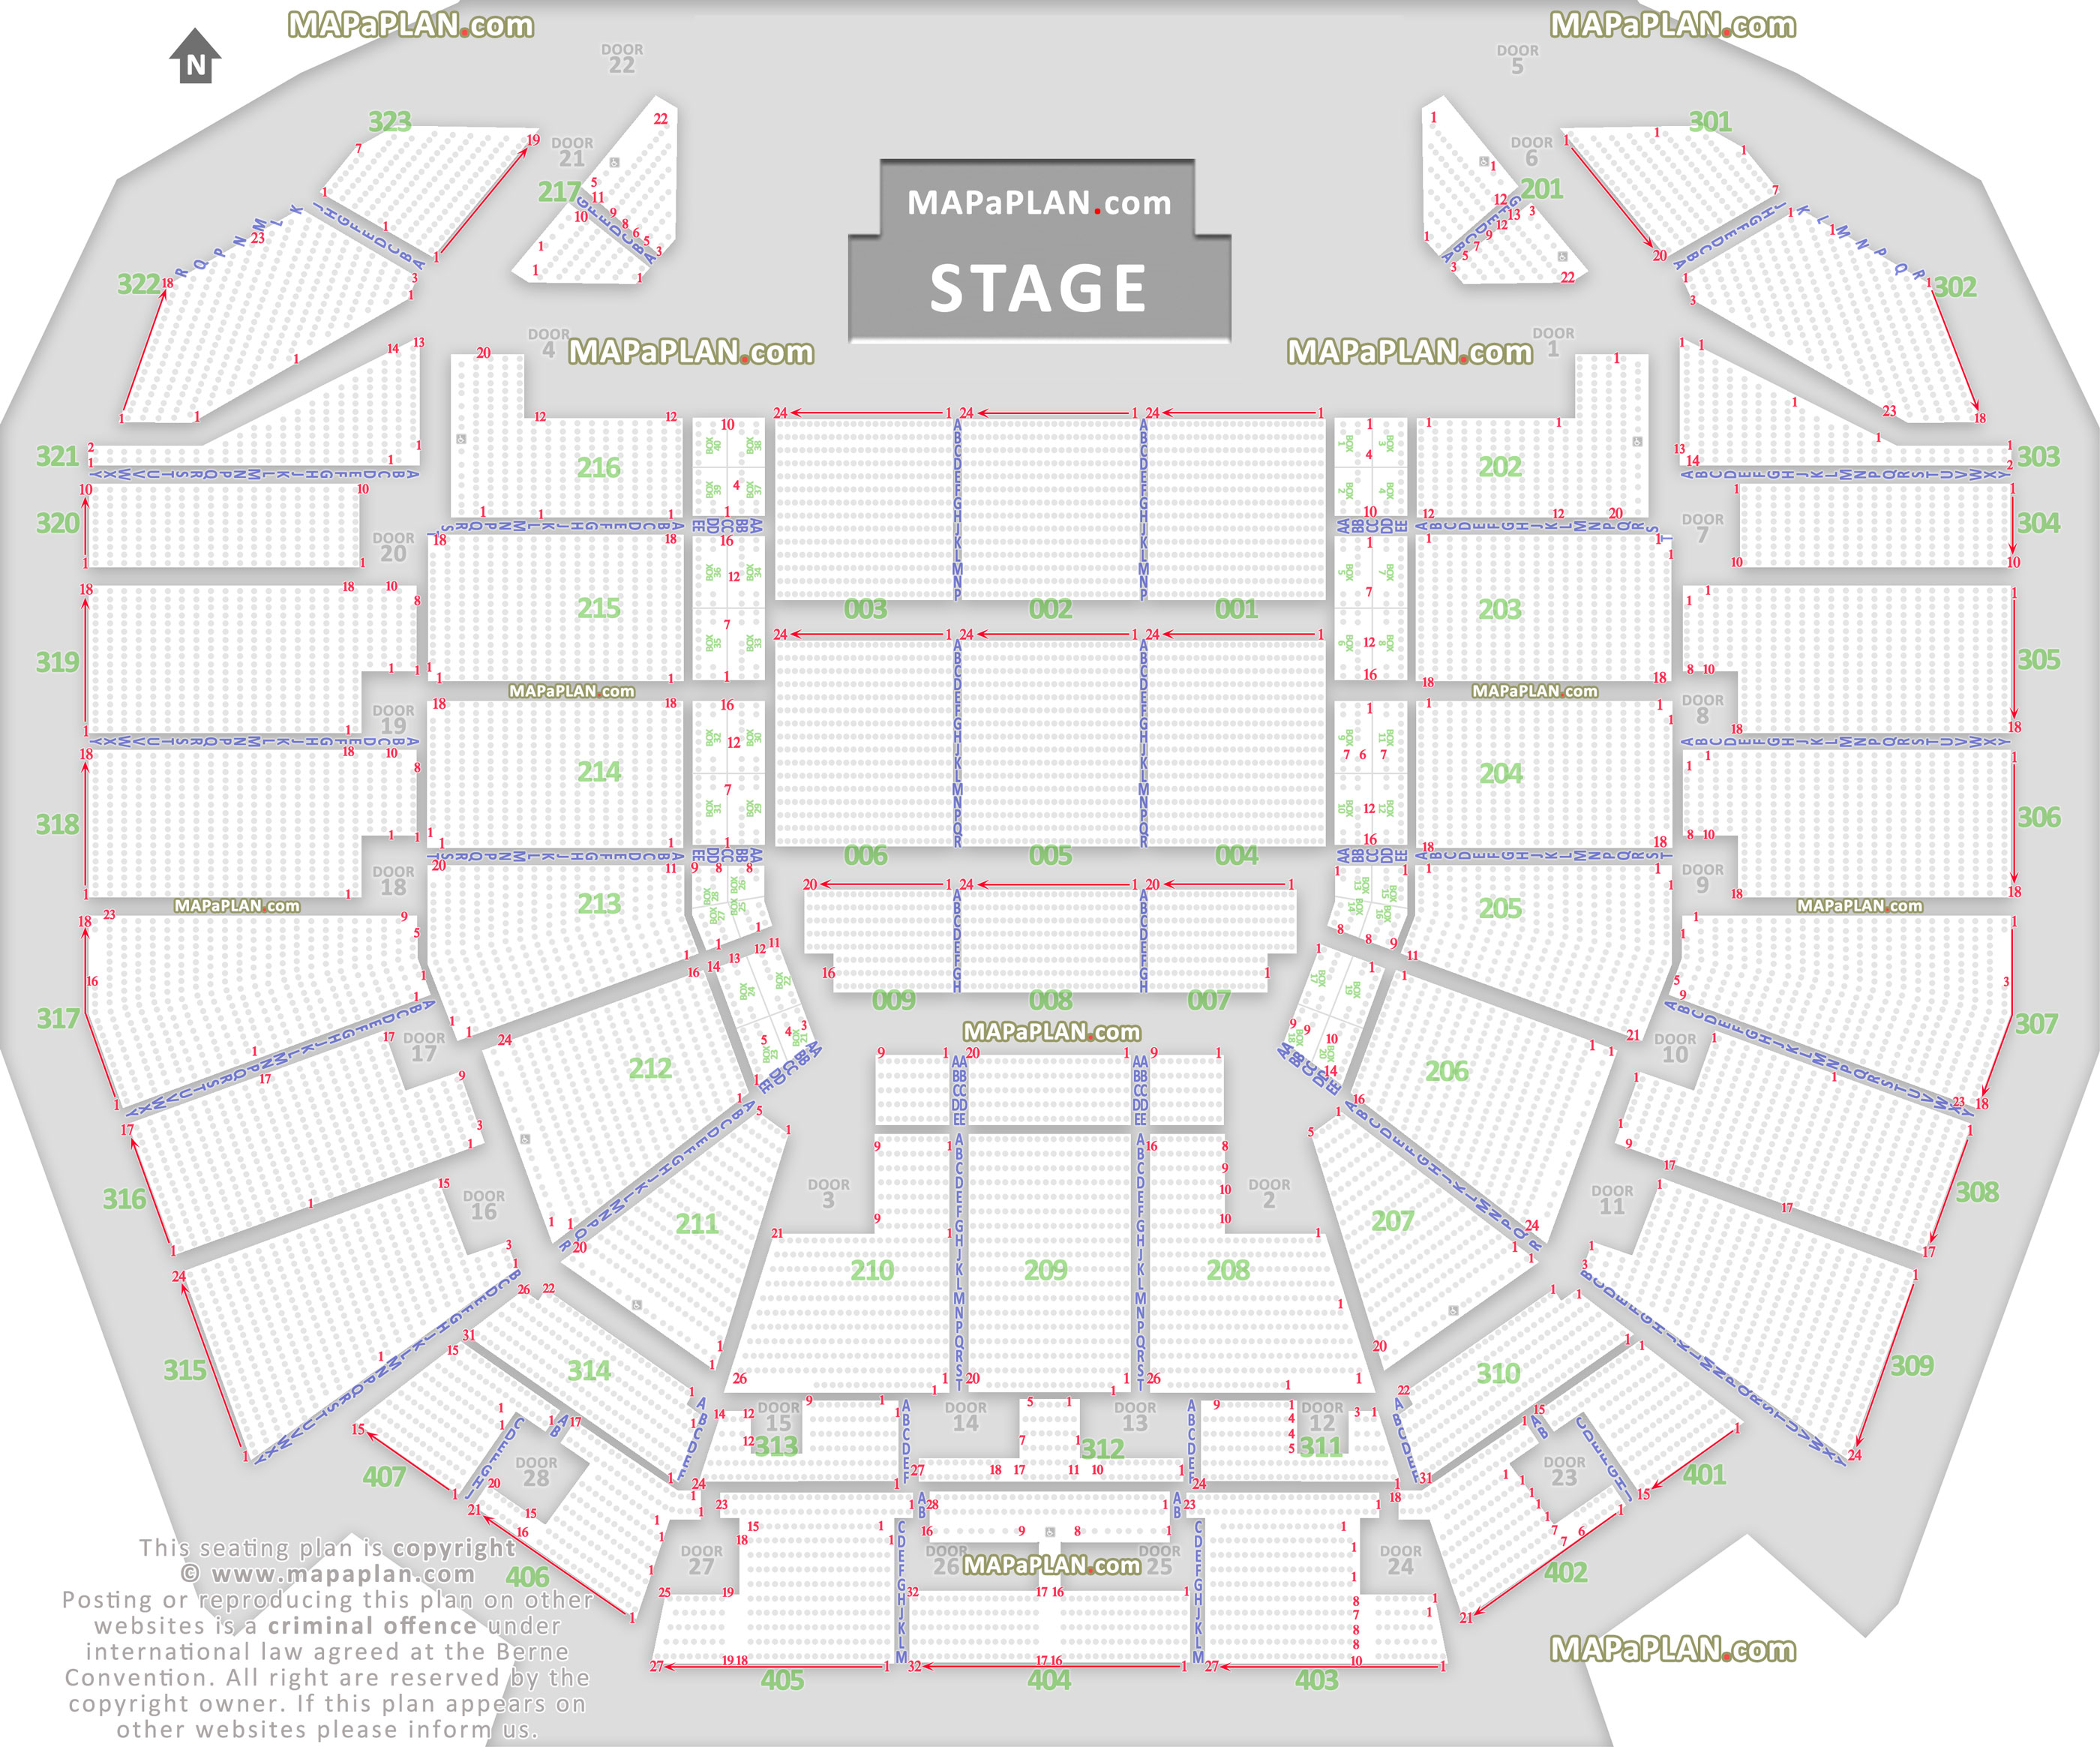 Perth Arena seat numbers detailed seating plan - MapaPlan.com